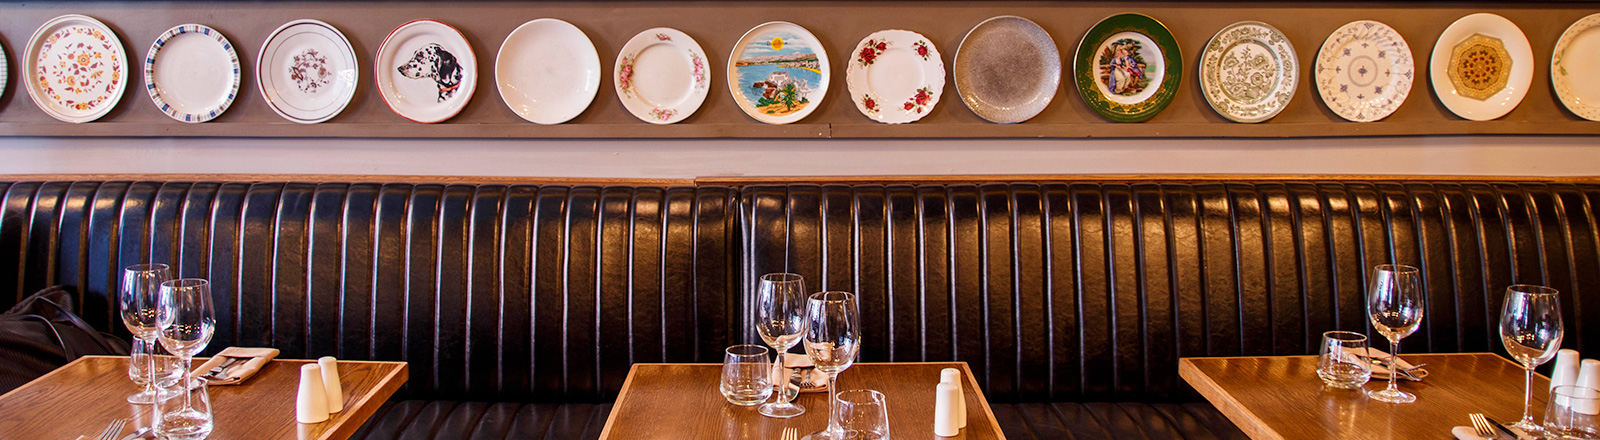 About Brasserie Sixty6 Restaurant Dublin